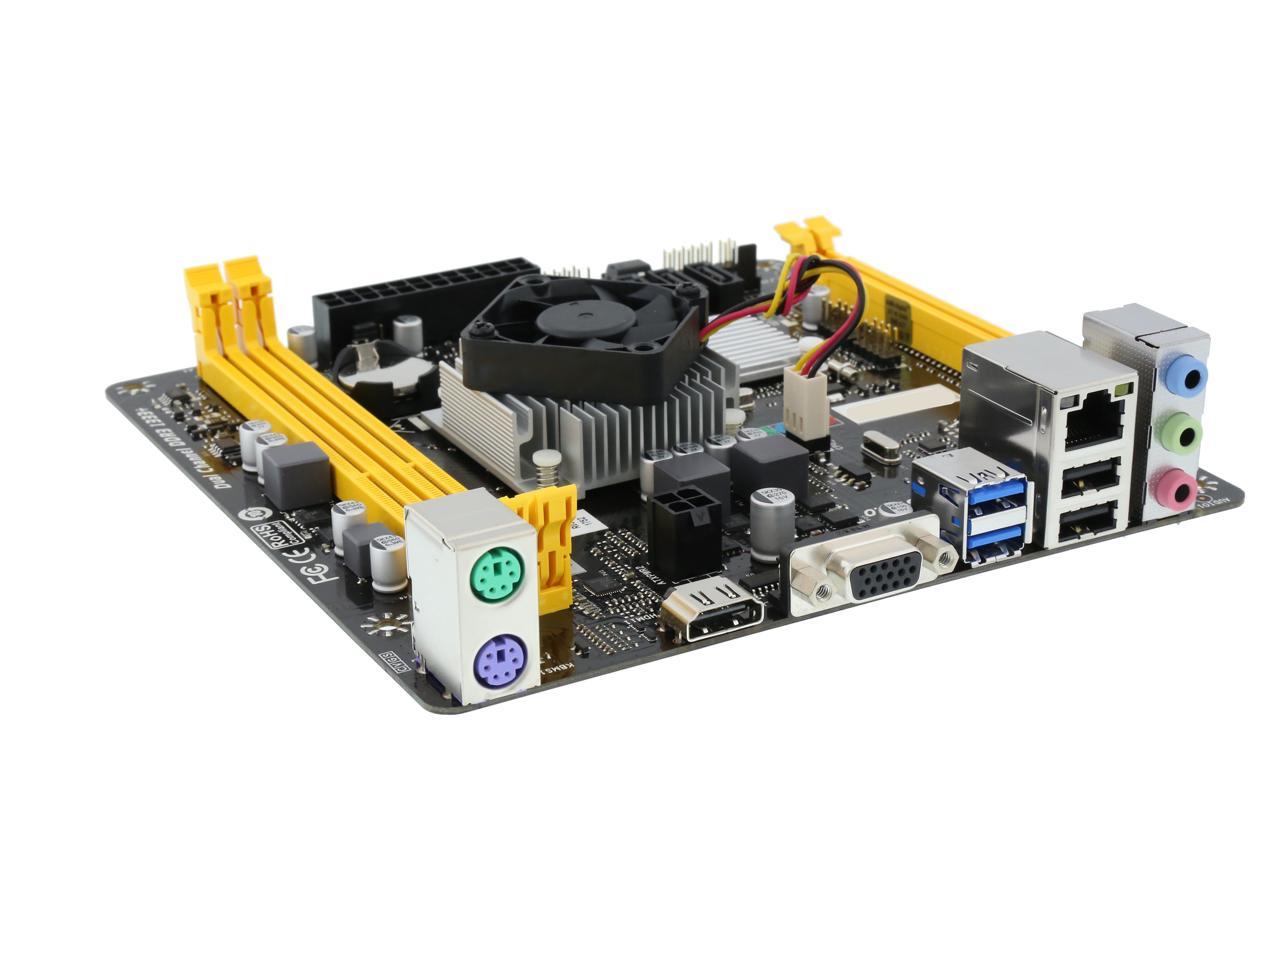 BIOSTAR A68N-5600 AMD A10-4655 (Quad-core 2.0G, turbo 2.8G) Processor AMD  A70M Mini ITX Motherboard / CPU / VGA Combo